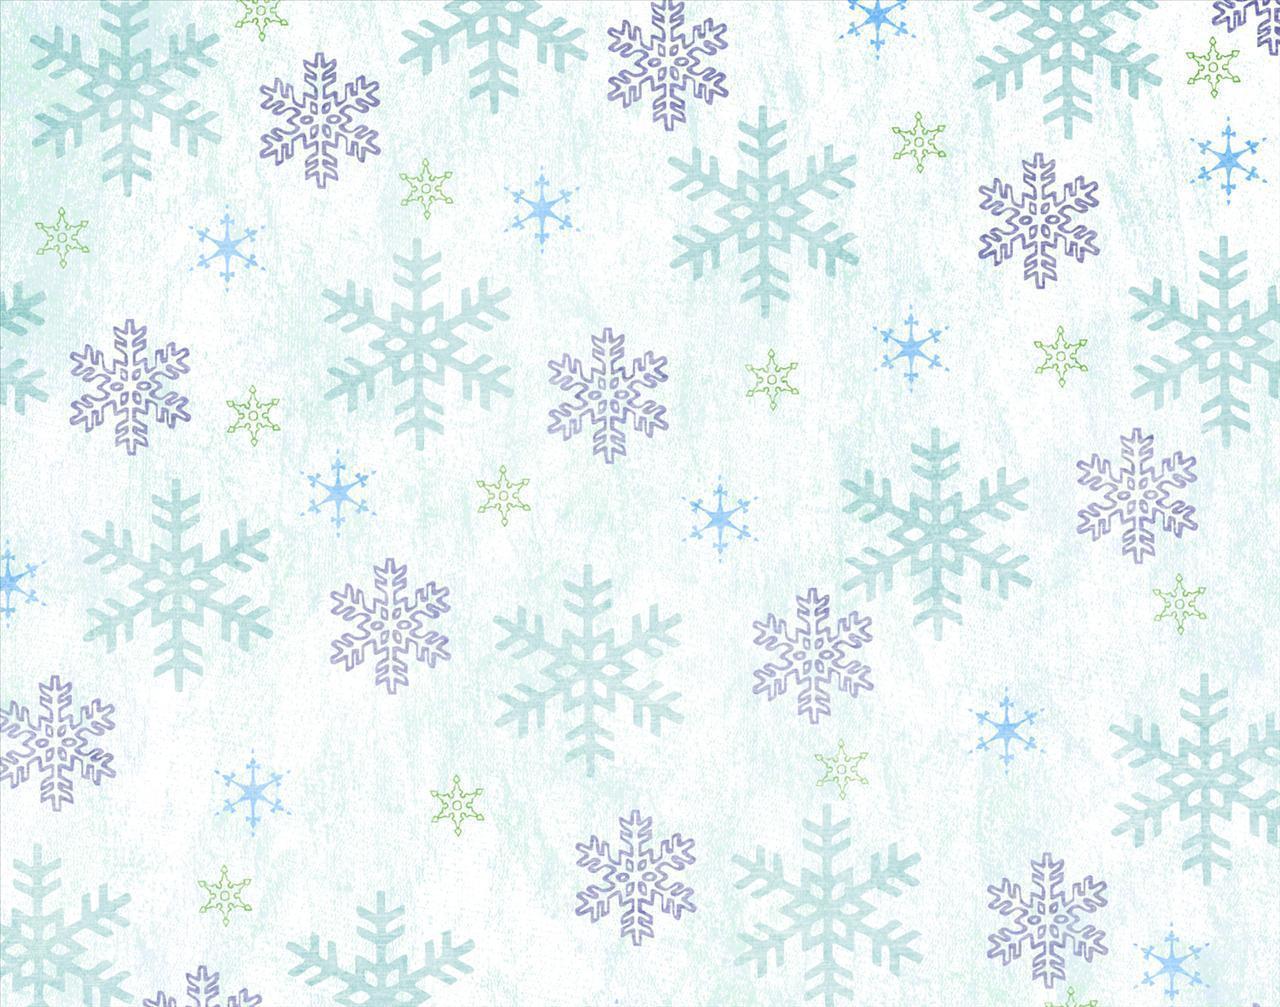 Snowflakes Backgrounds Wallpaper Cave HD Wallpapers Download Free Images Wallpaper [wallpaper981.blogspot.com]